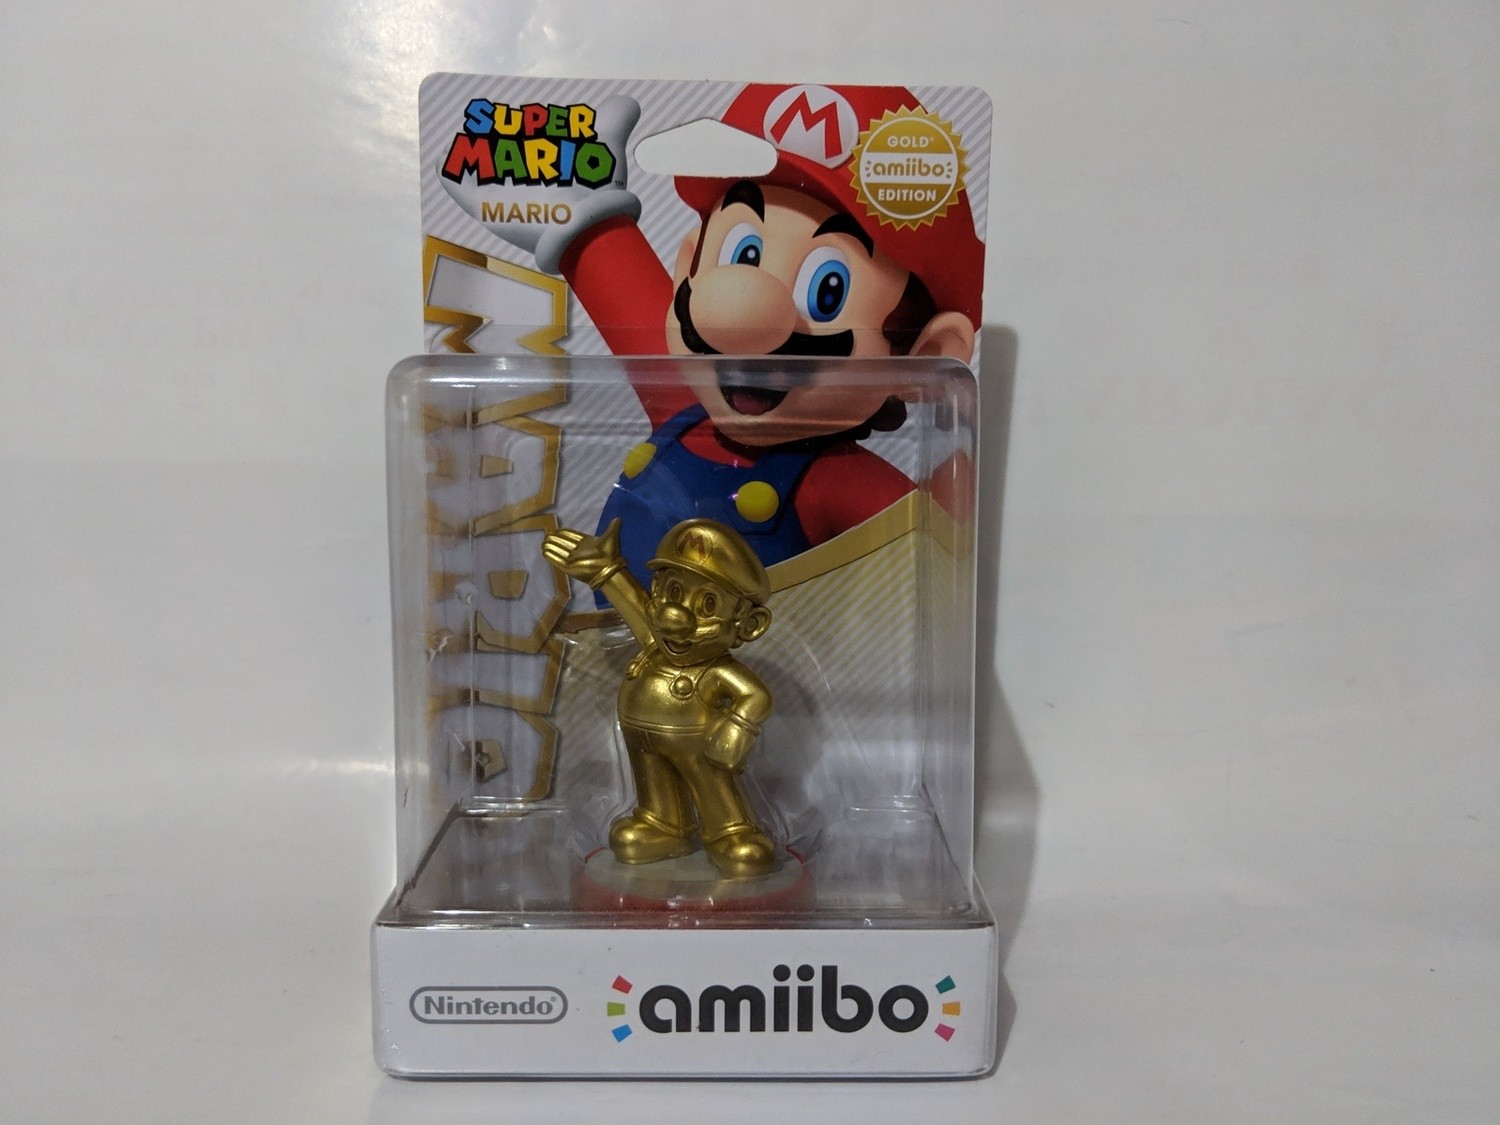 Super Mario Amiibo GOLD mario figure- Limited edition